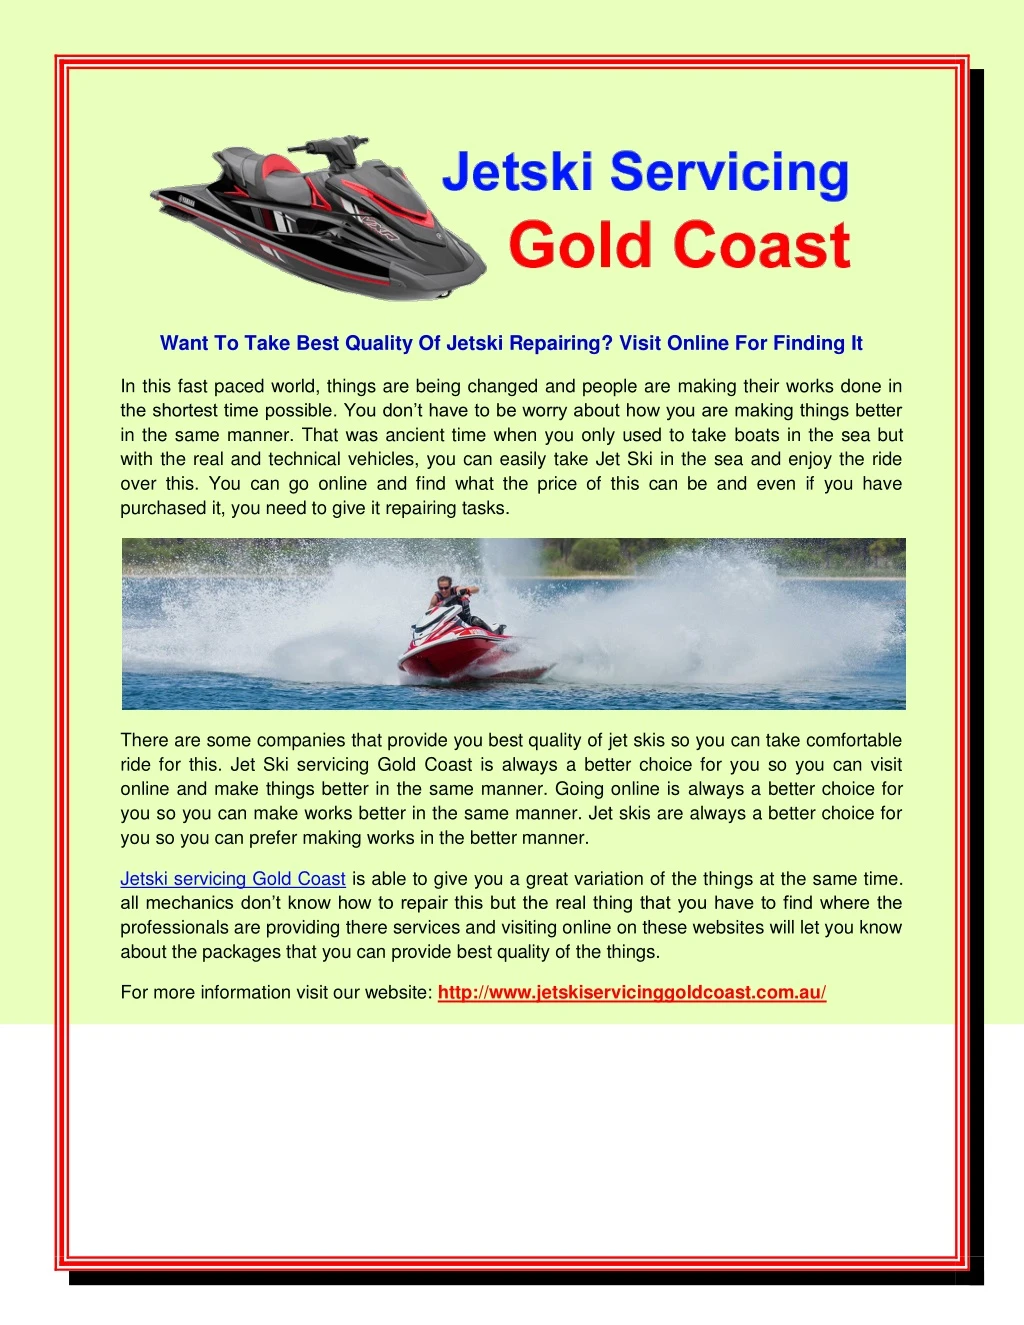 want to take best quality of jetski repairing